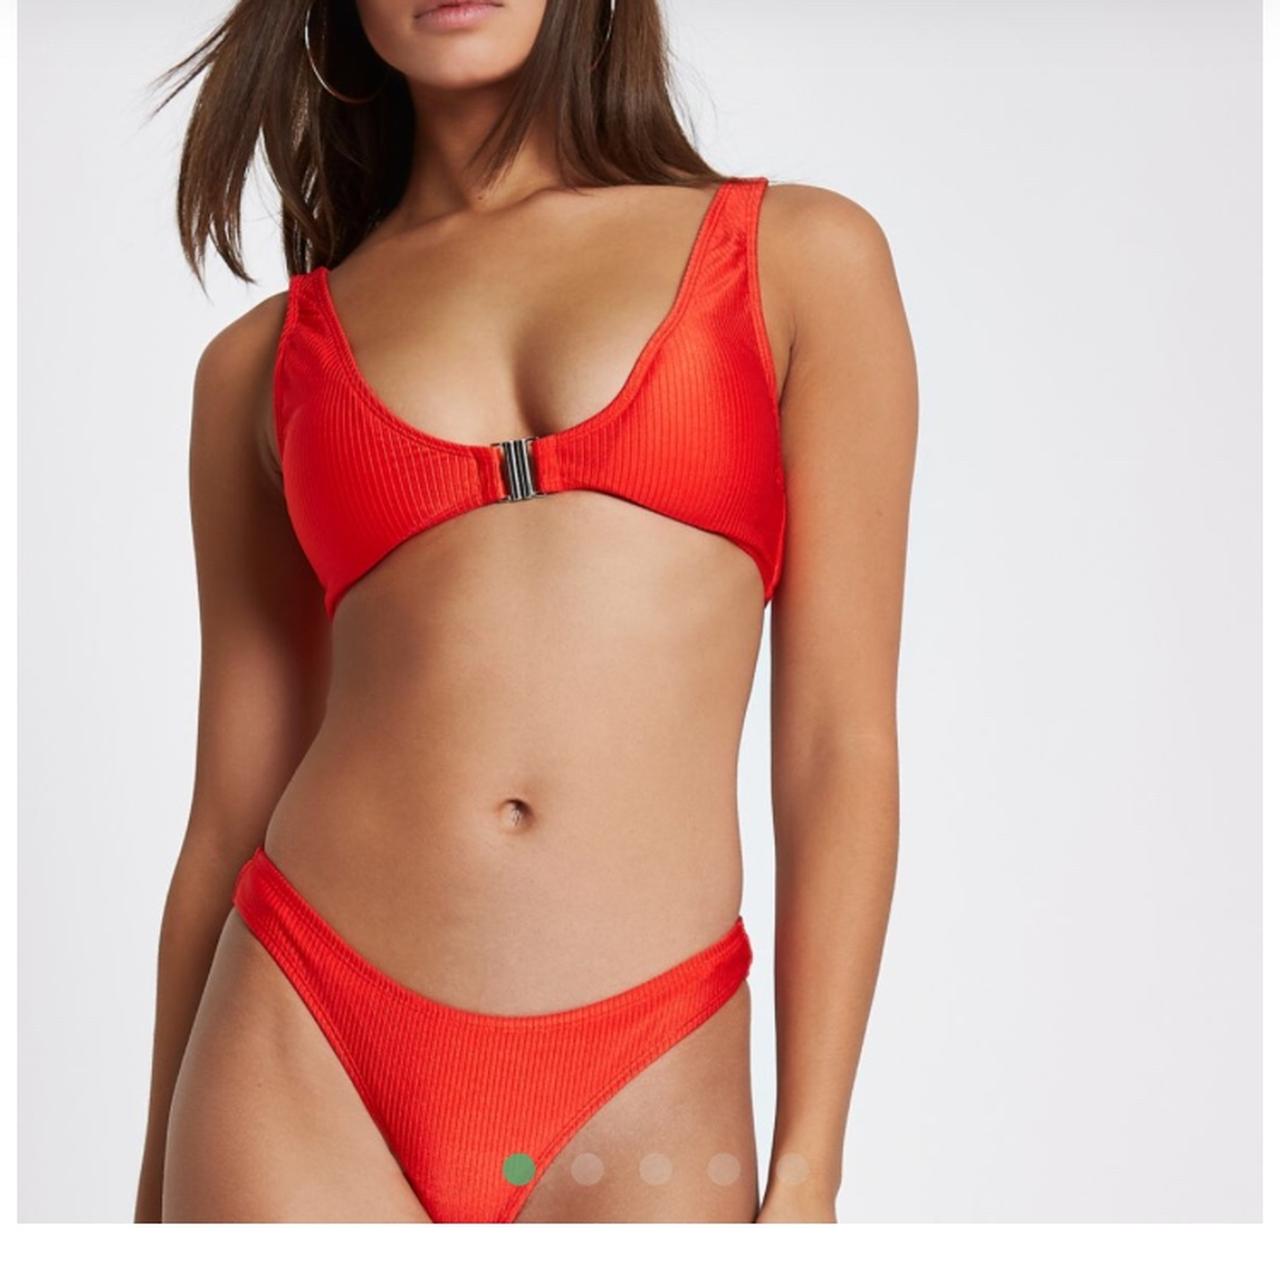 river island bikini top for sale- size 10, too small - Depop